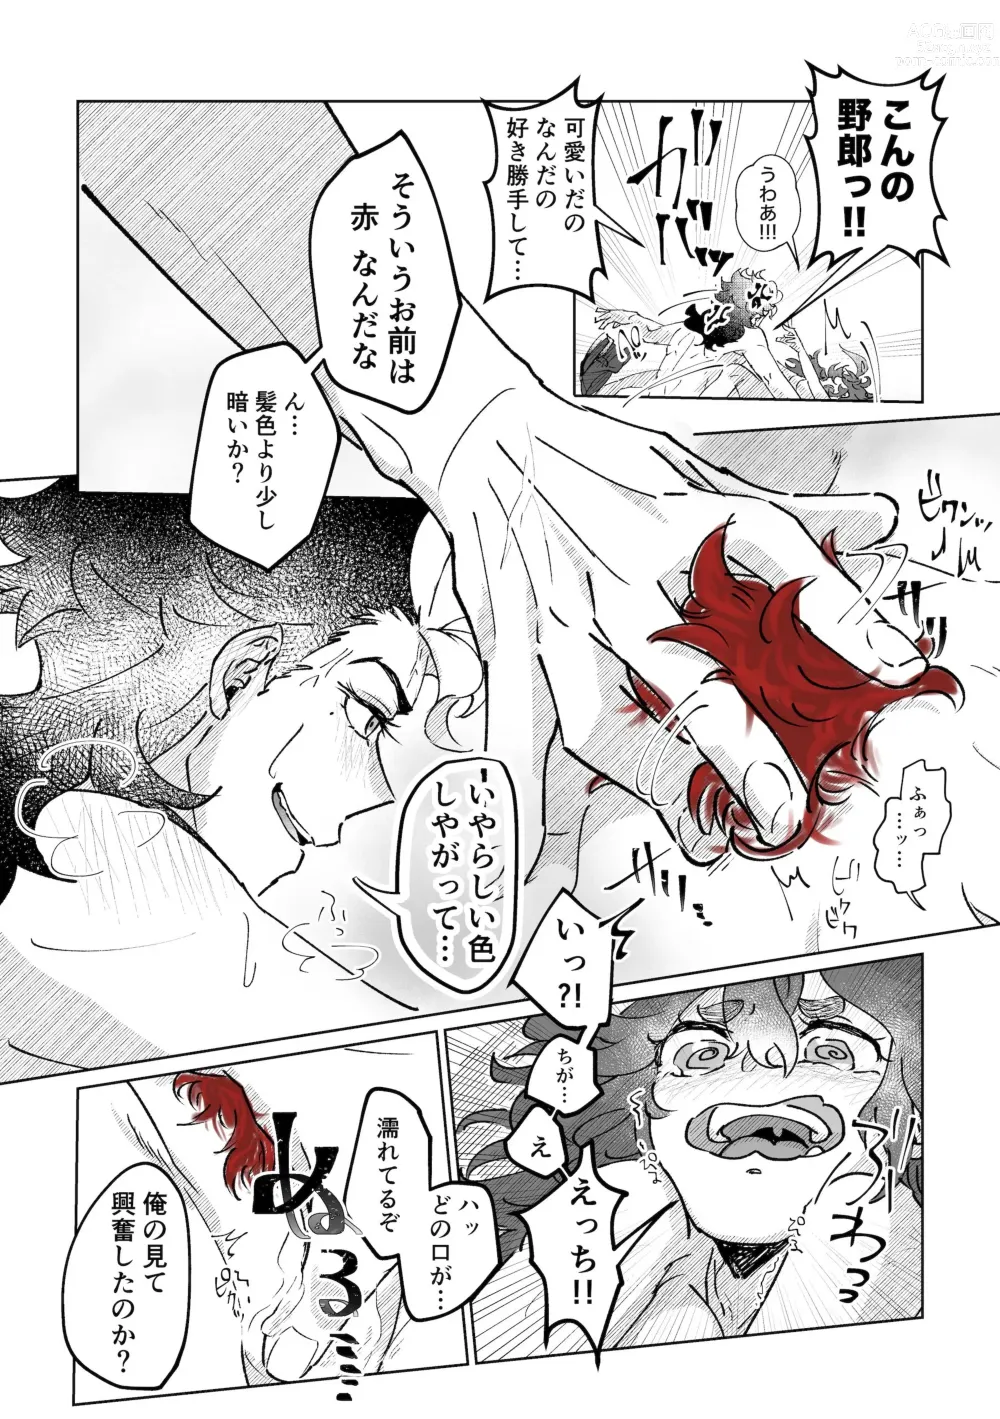 Page 6 of doujinshi Melt pink Melt Redhinkan sanpuru[Gundam witch from mercury)